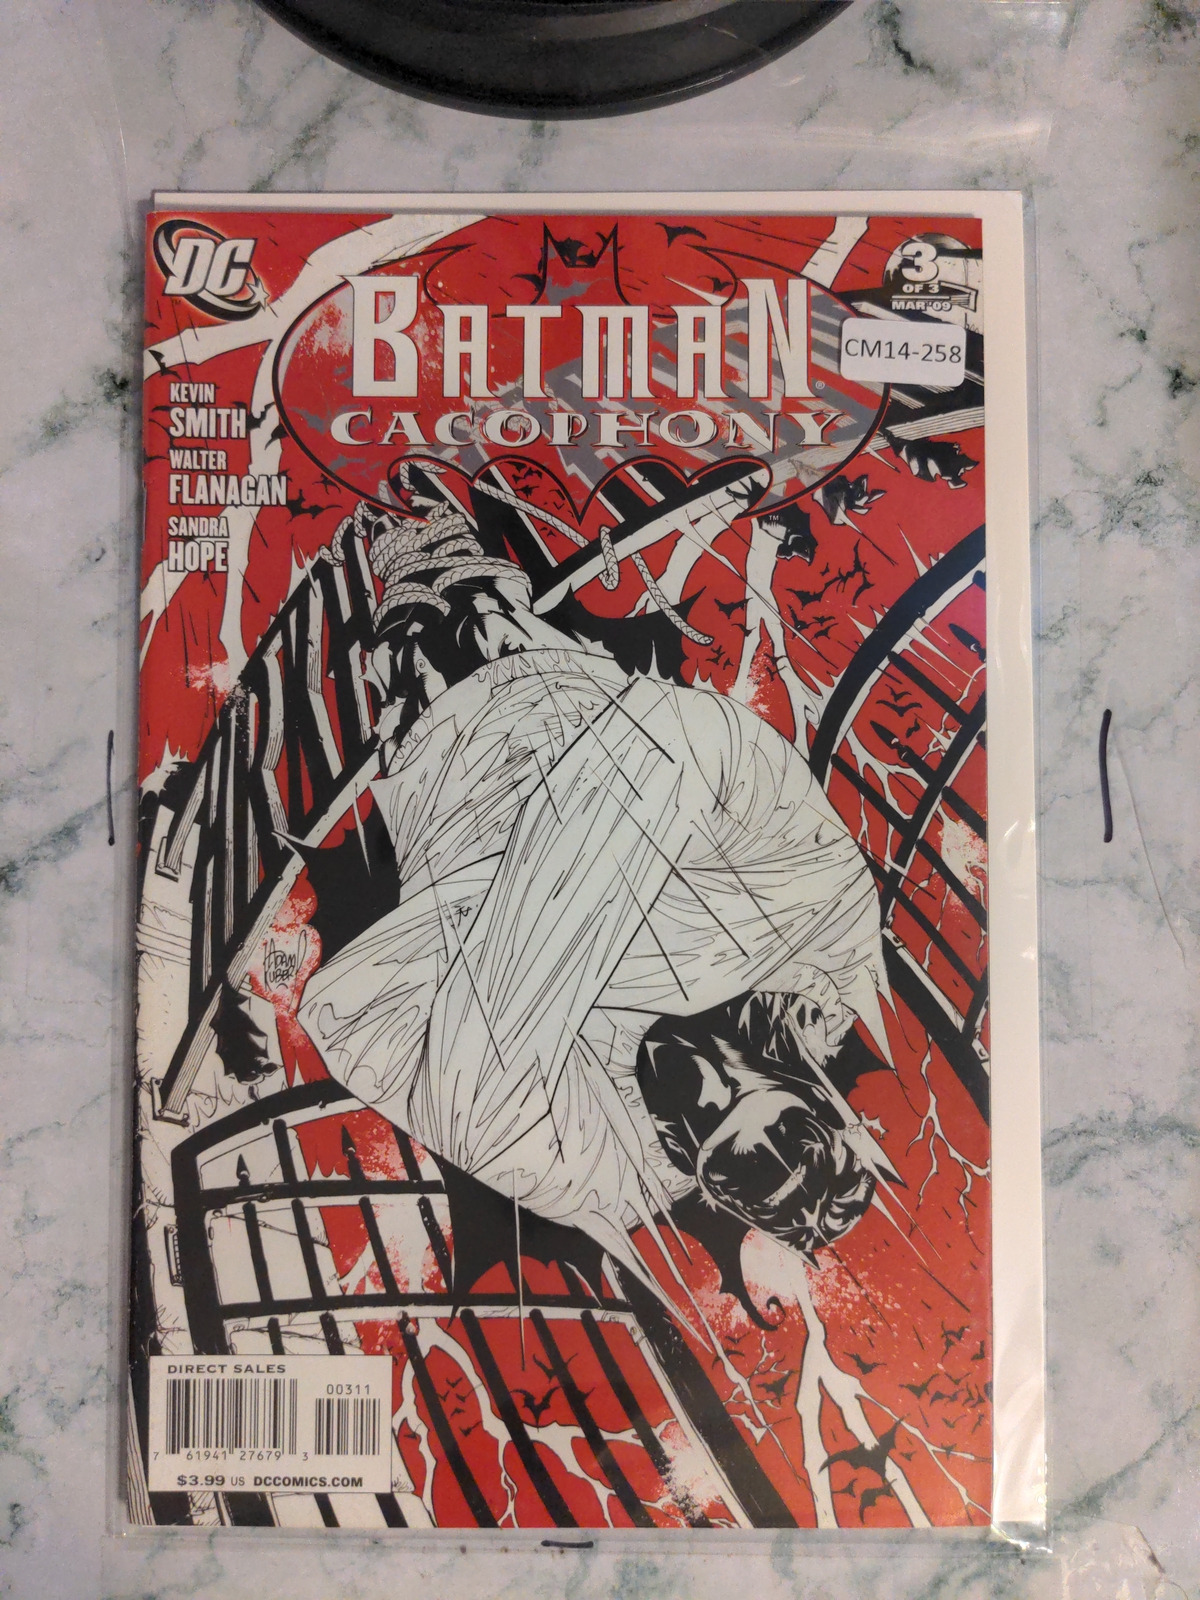 BATMAN CACOPHONY #3 MINI 7.0 DC COMIC BOOK CM14-258